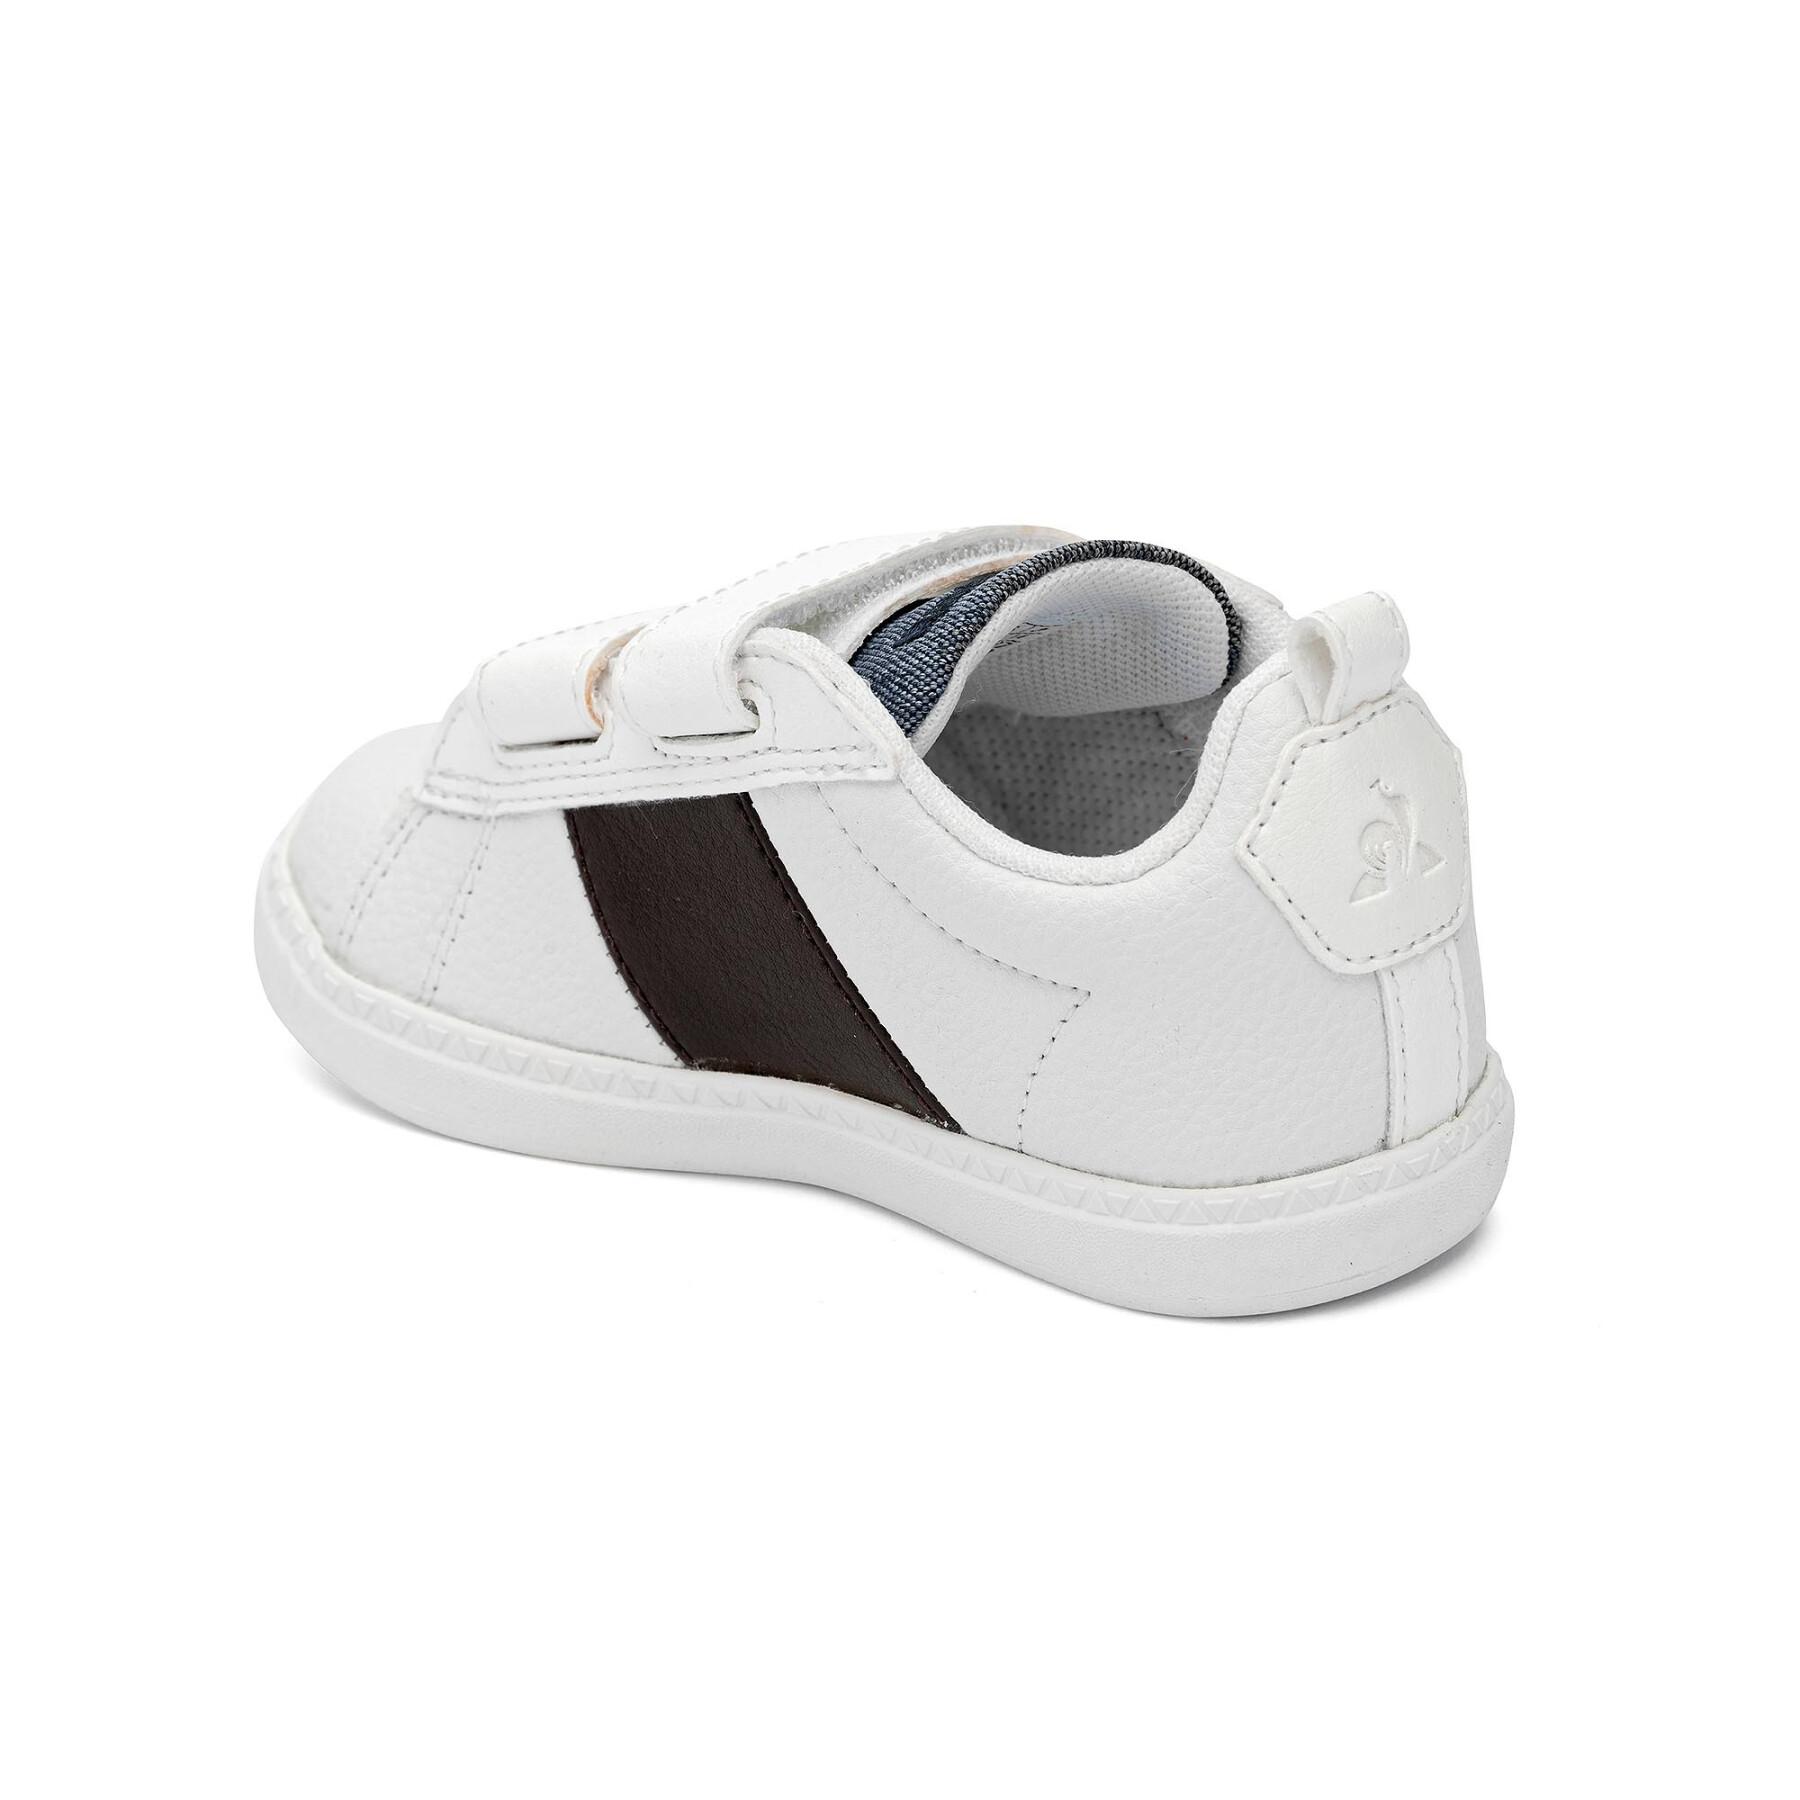 Baby shoes Le Coq Sportif CourtClassic